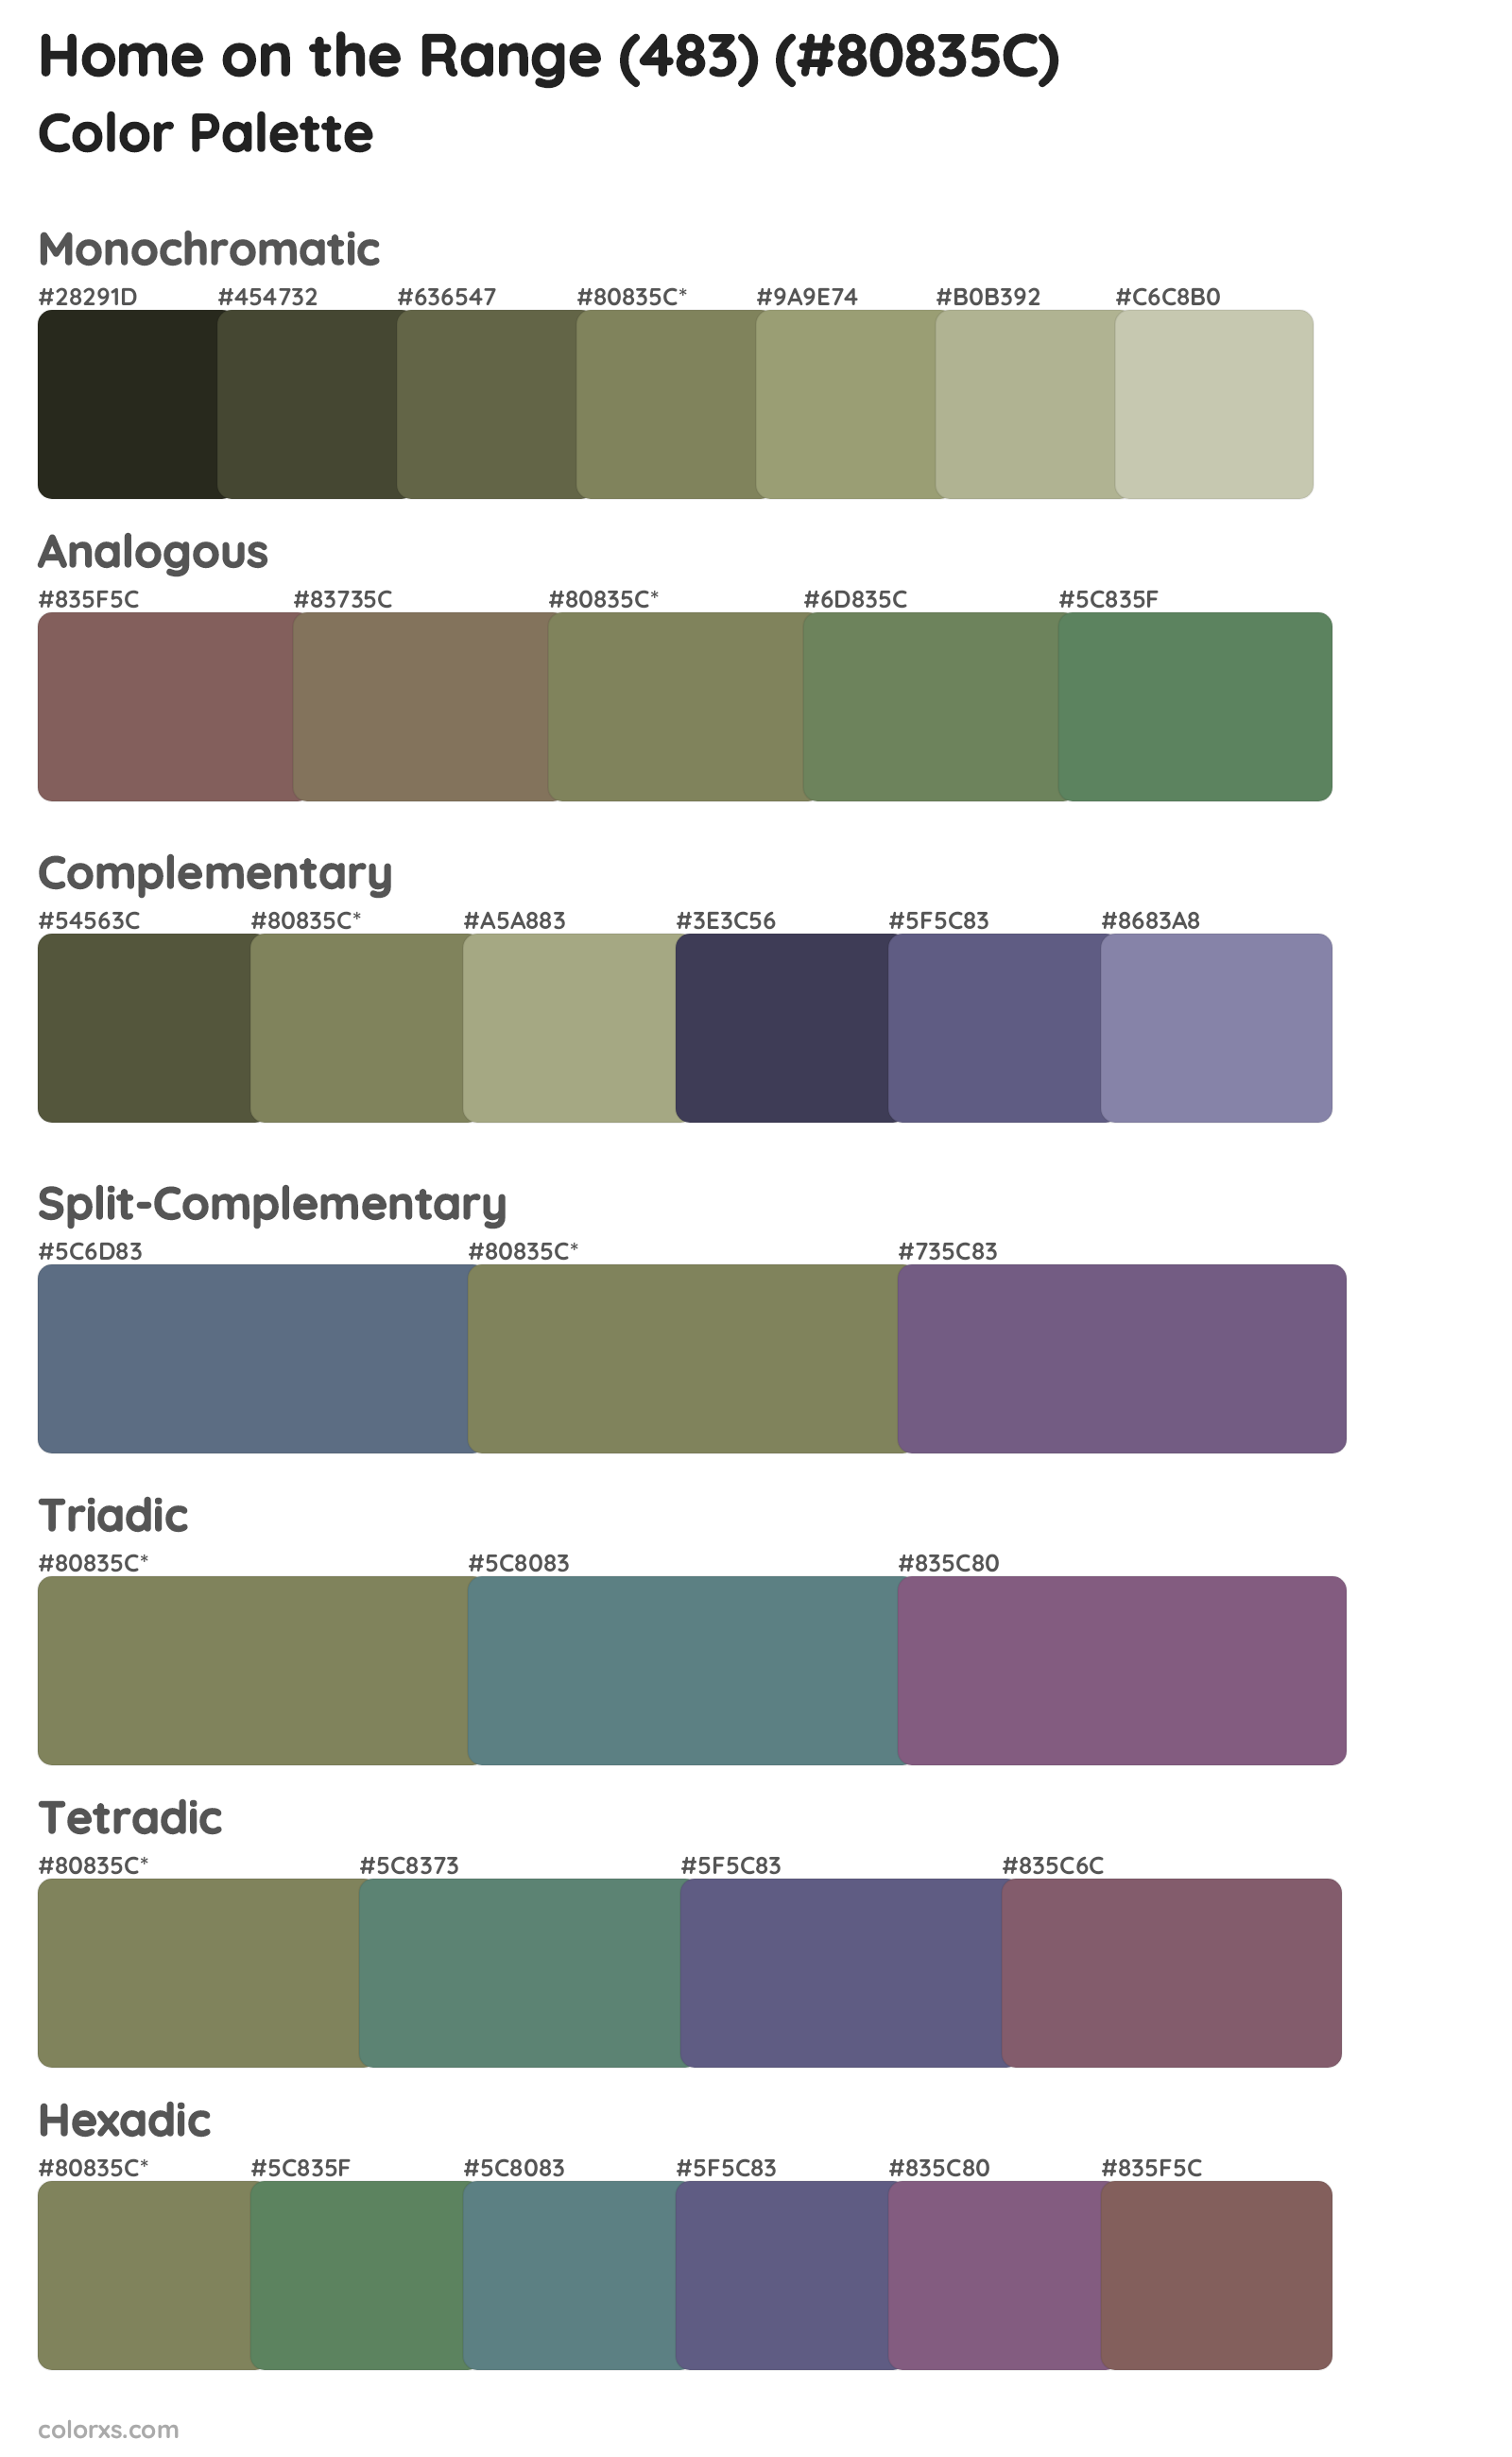 Home on the Range (483) Color Scheme Palettes